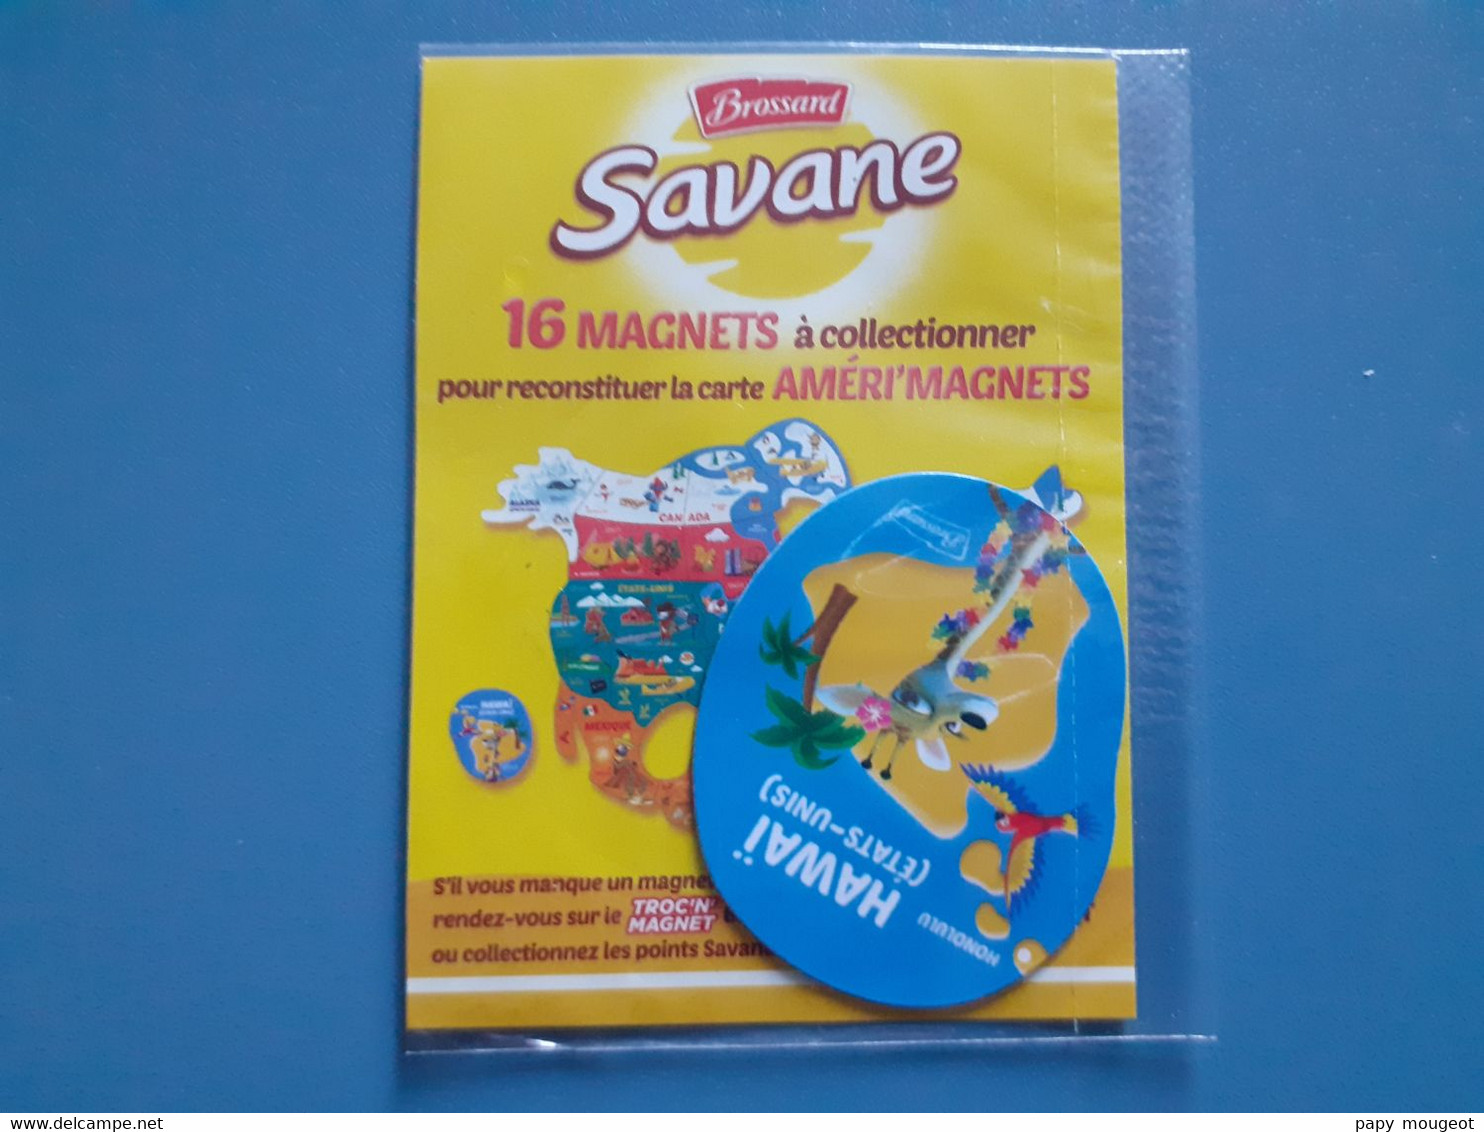 Brossard Savane - 16 Magnets Carte AMERI'MAGNETS - Hawaï (1) - Publicitaires